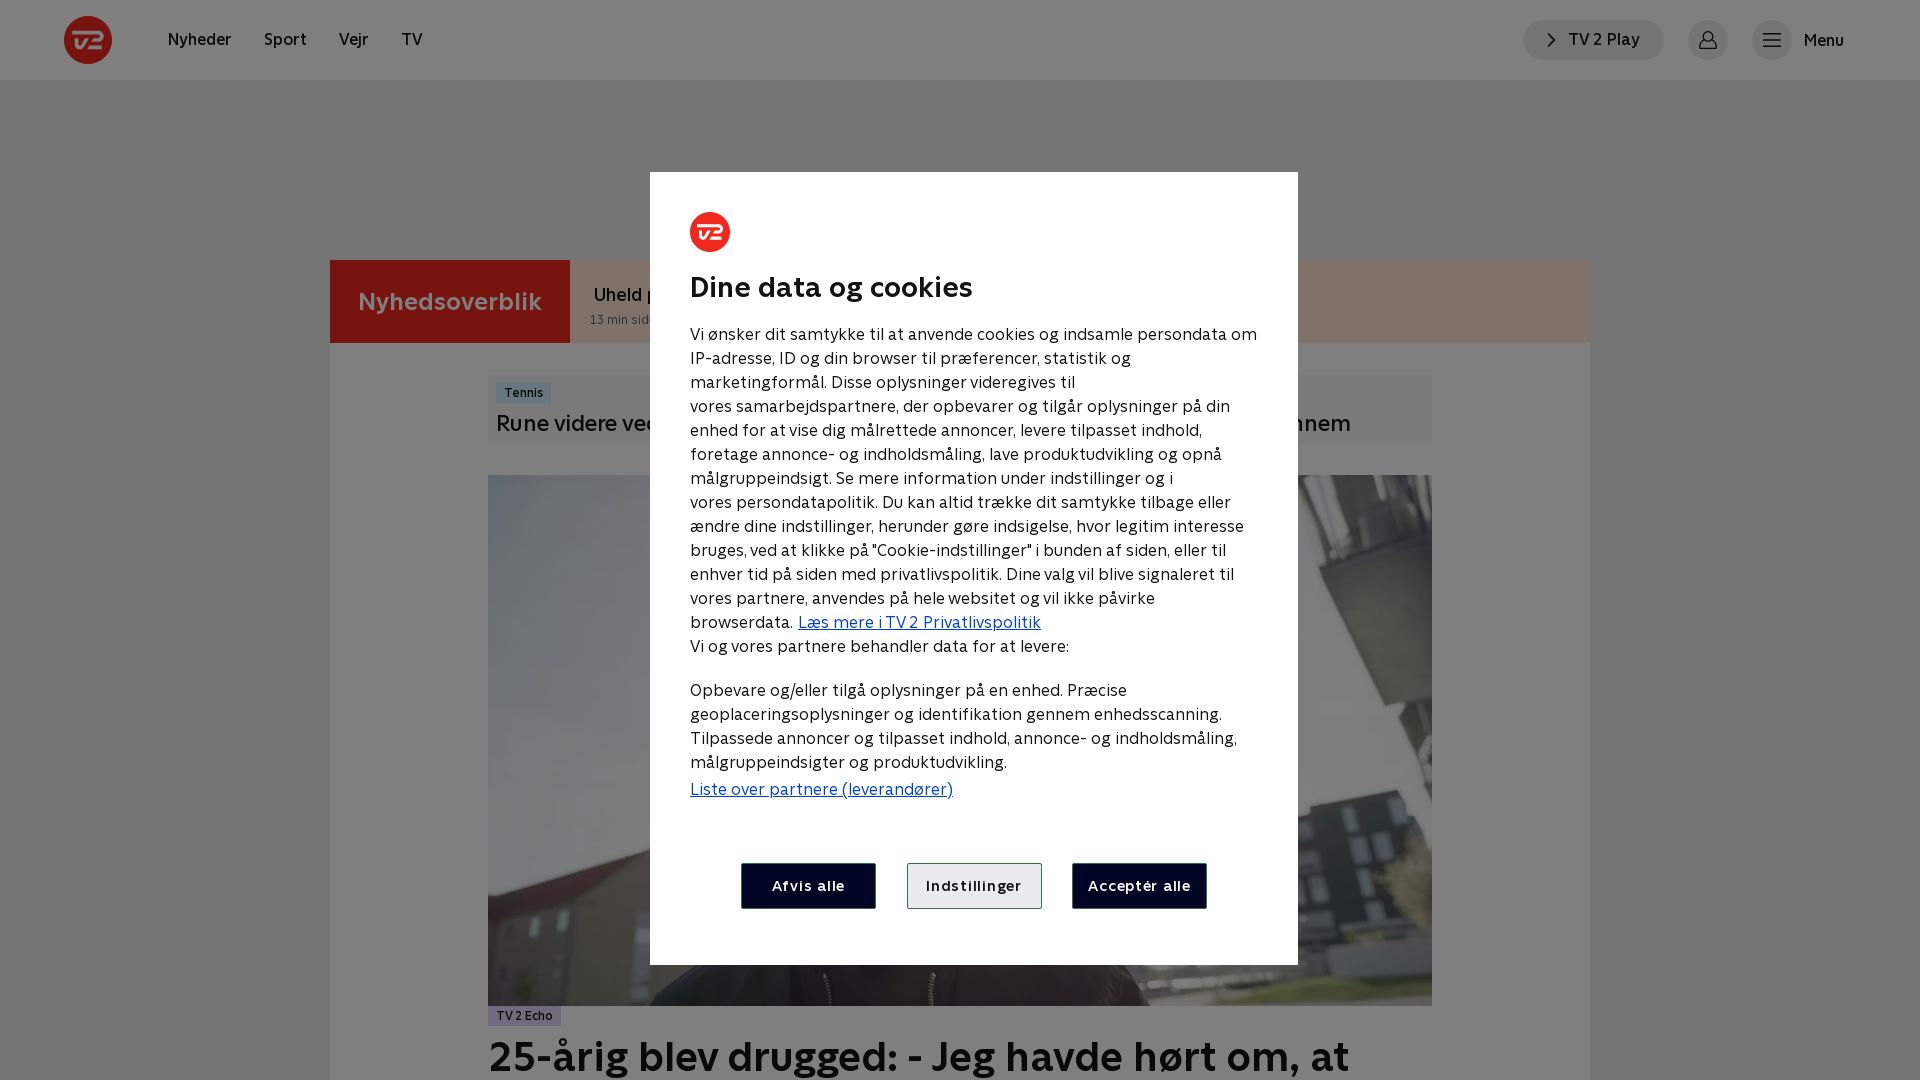 Status do site tv2.dk está   ONLINE